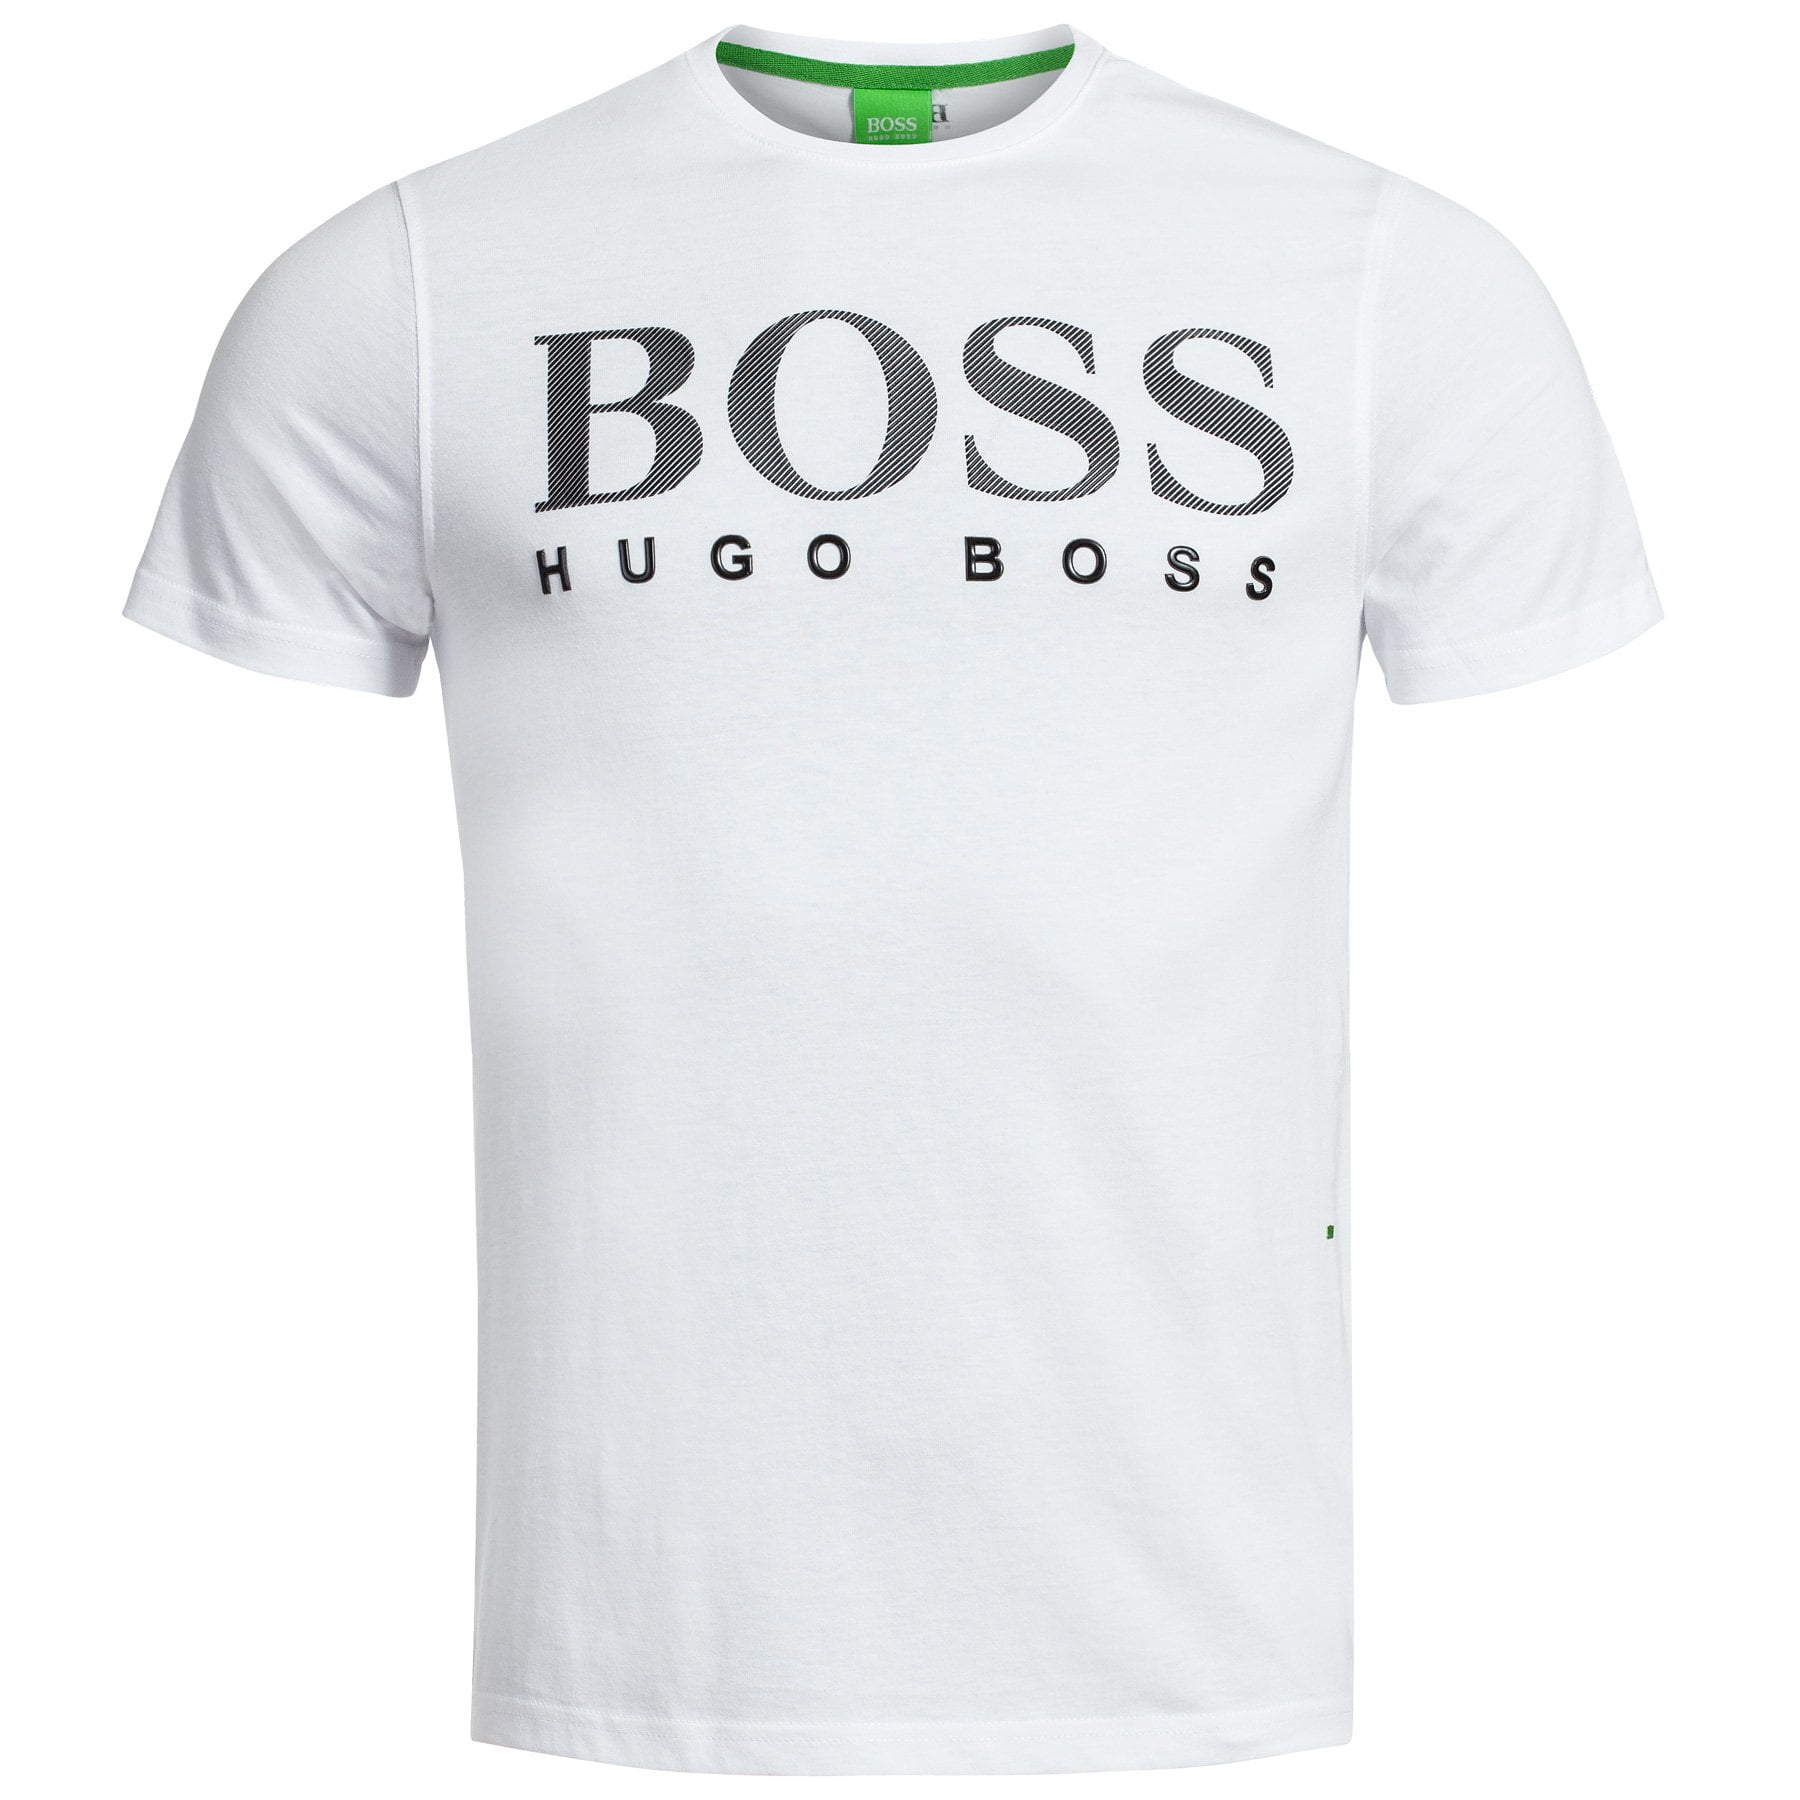 hugo boss t shirt 2019